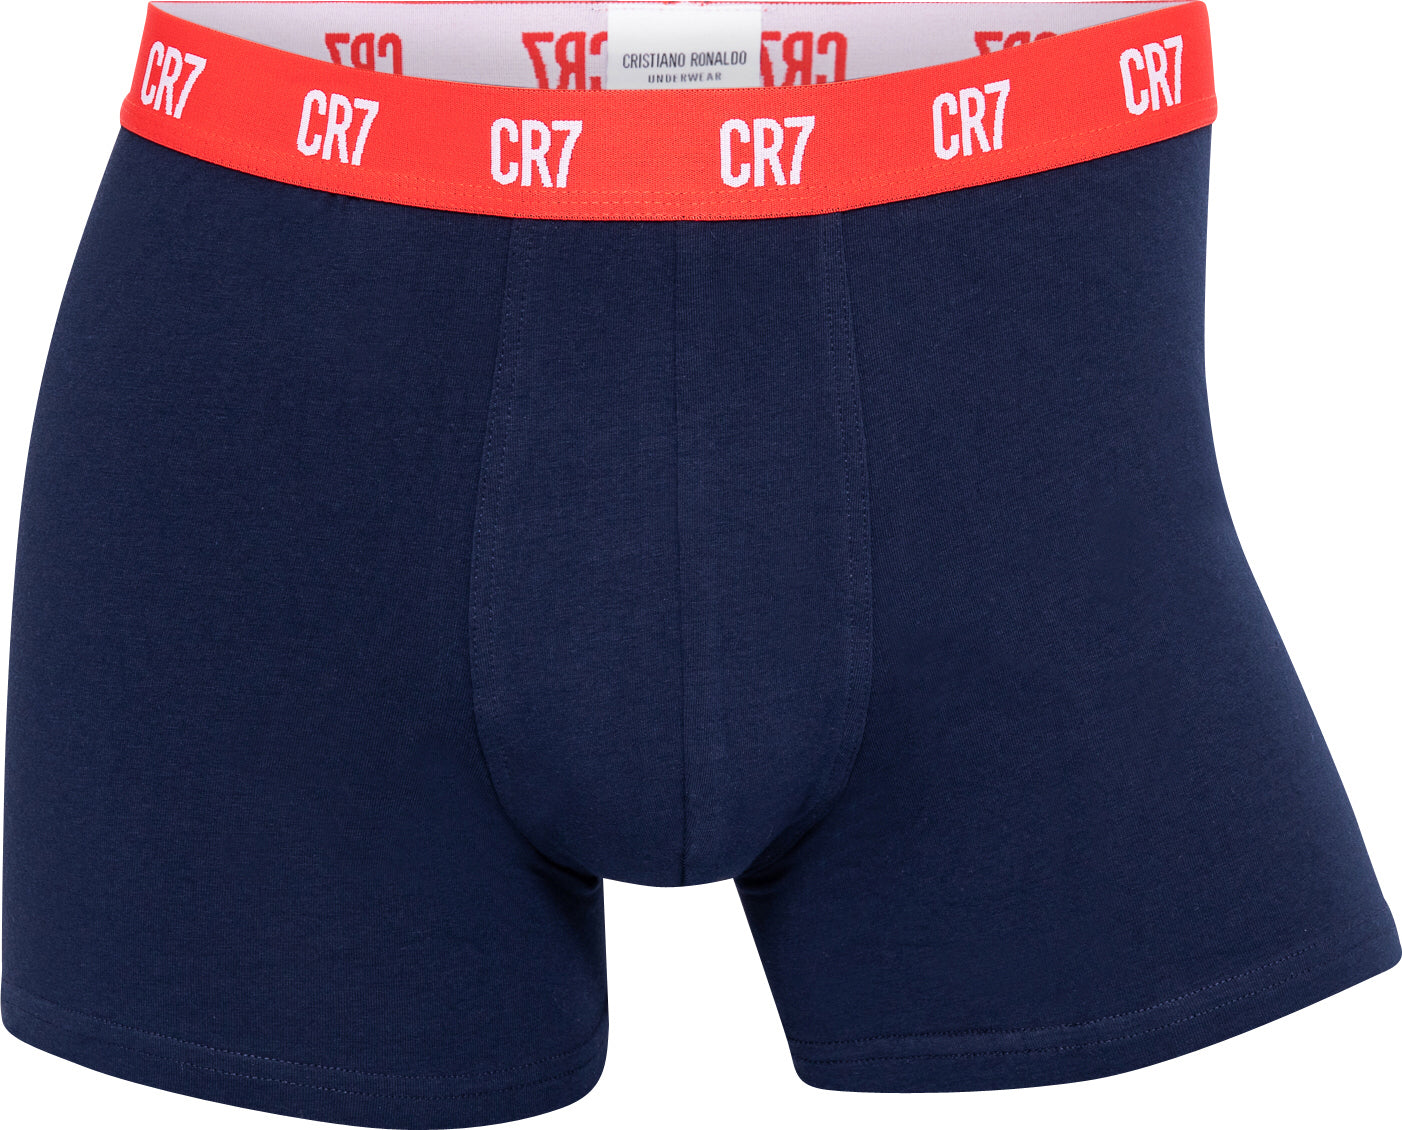 Cristiano Ronaldo CR7 White Basic 3-Pack Trunk Boxer Briefs Men's Underwear  L